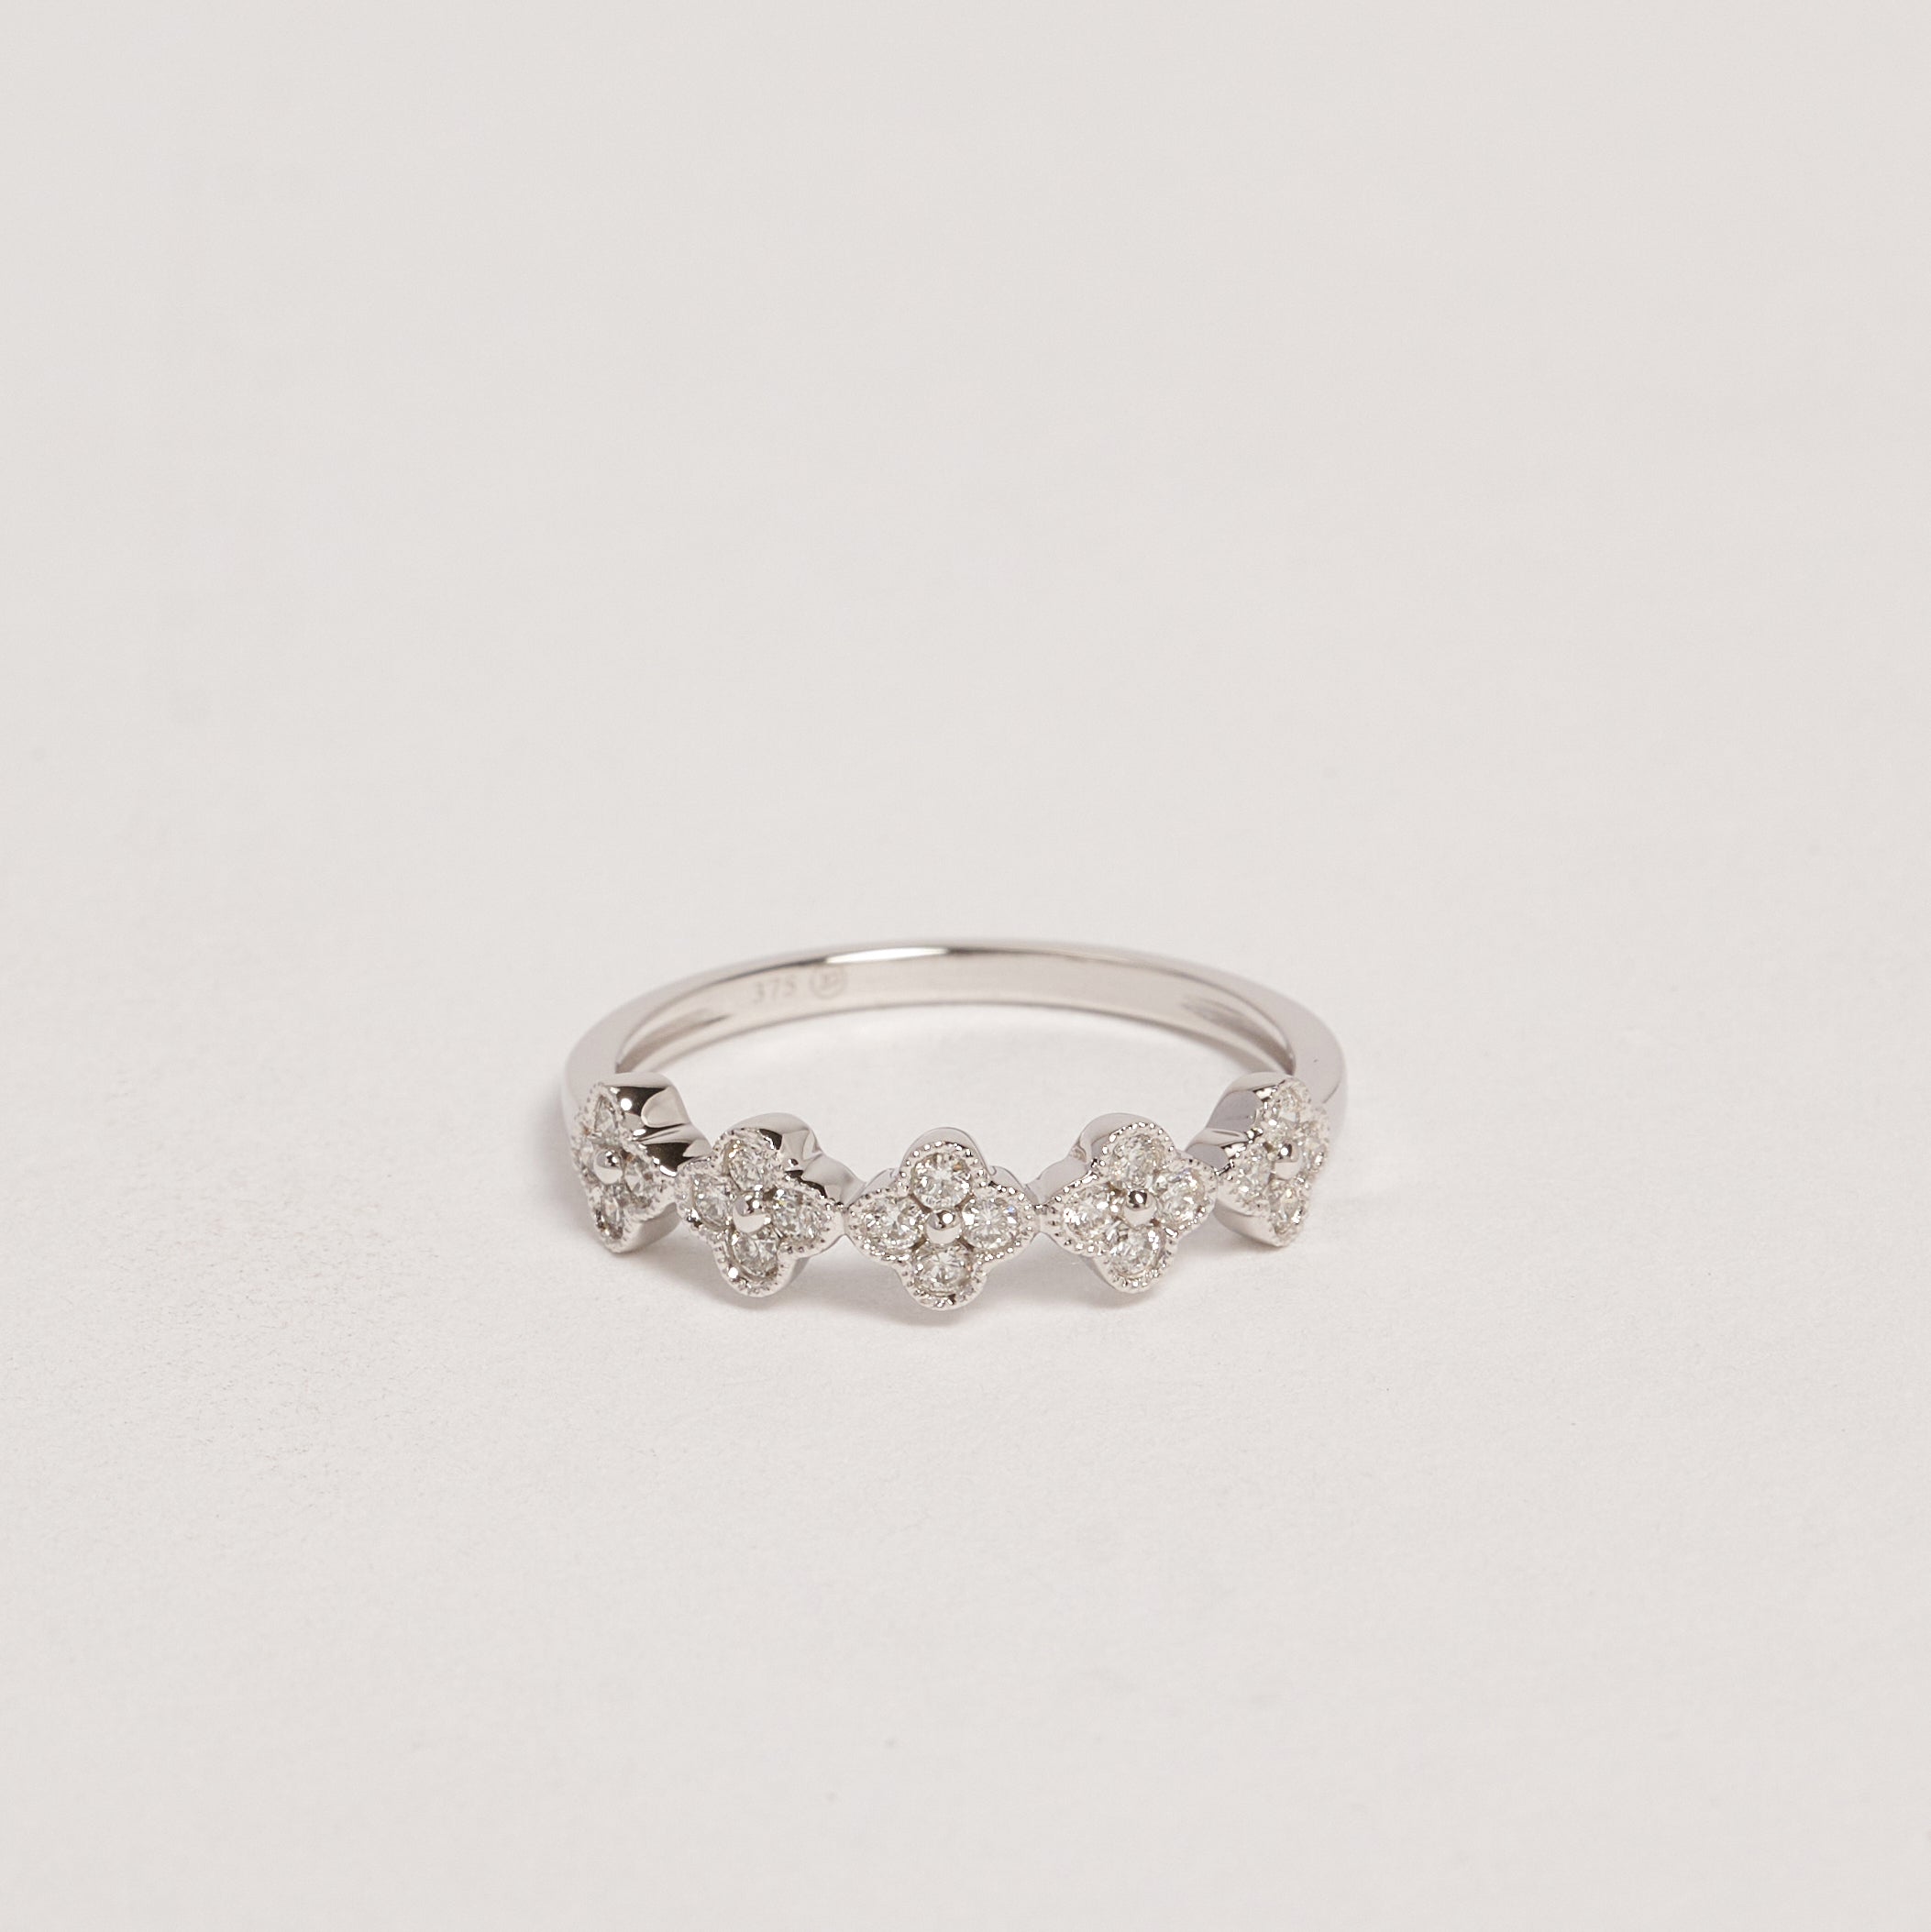 Desta 9ct White Gold Diamond Ring